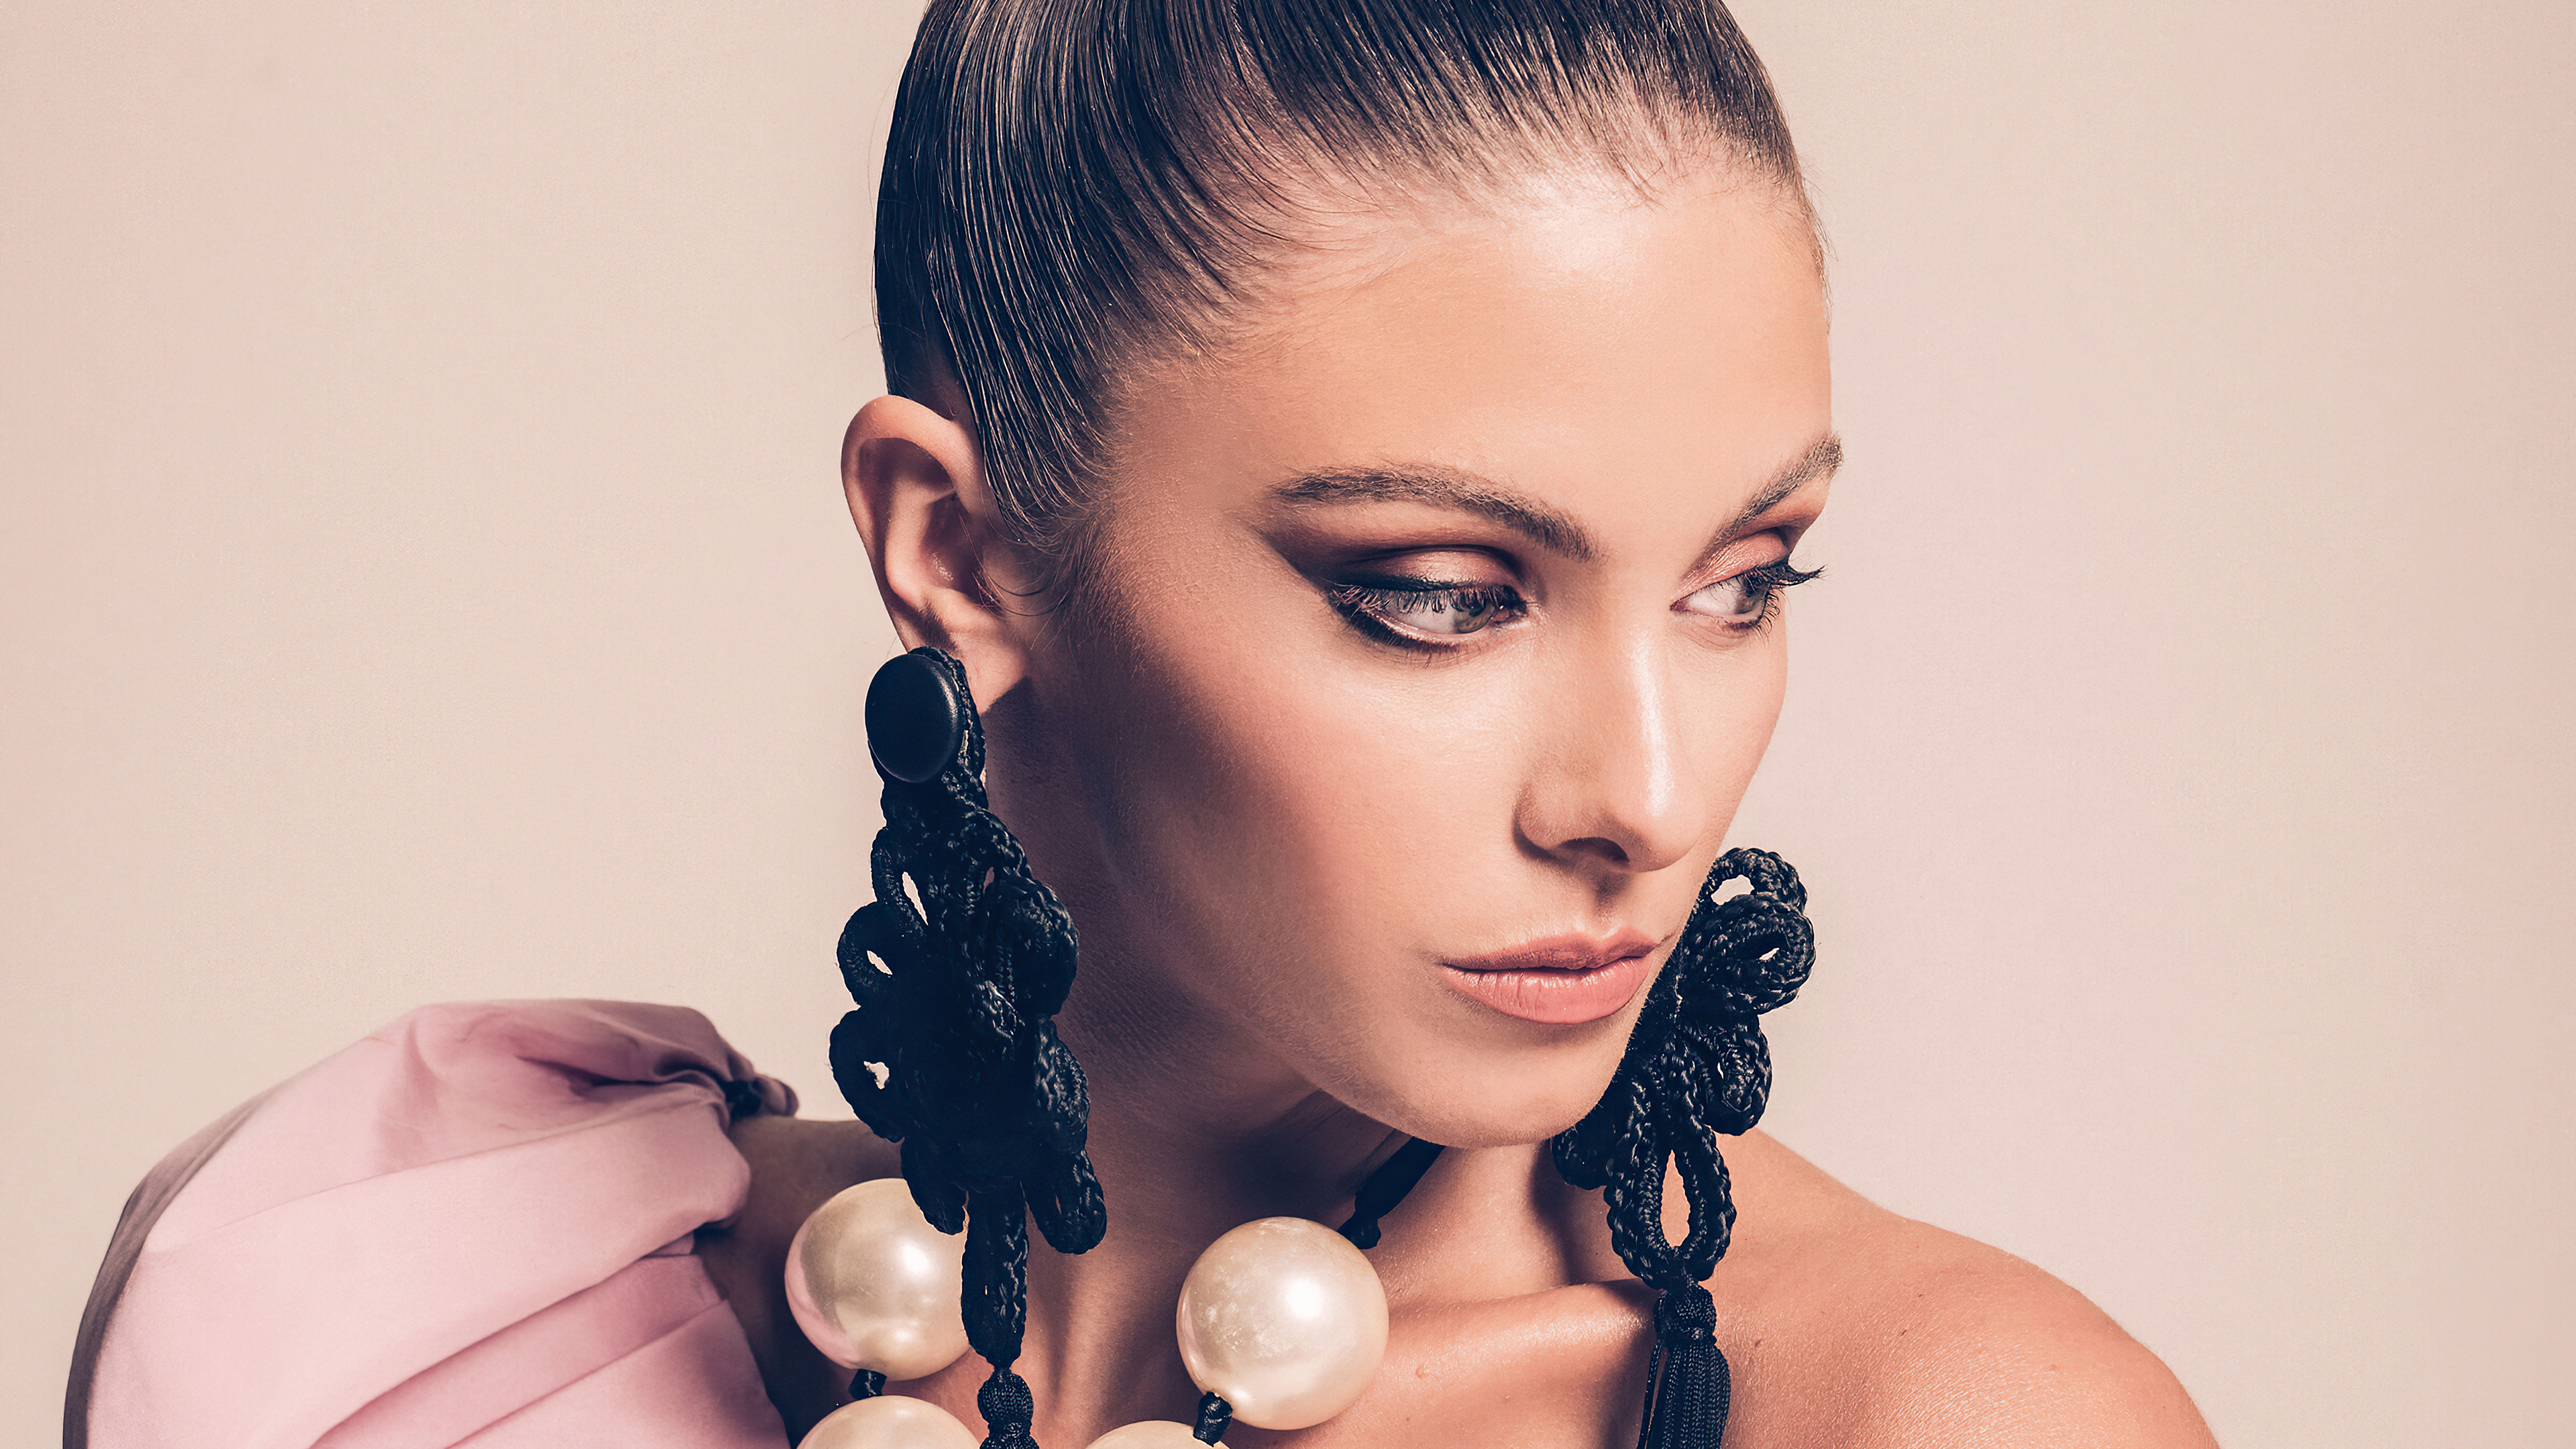 American Carmella Rose Earrings Face Girl Model 3840x2160